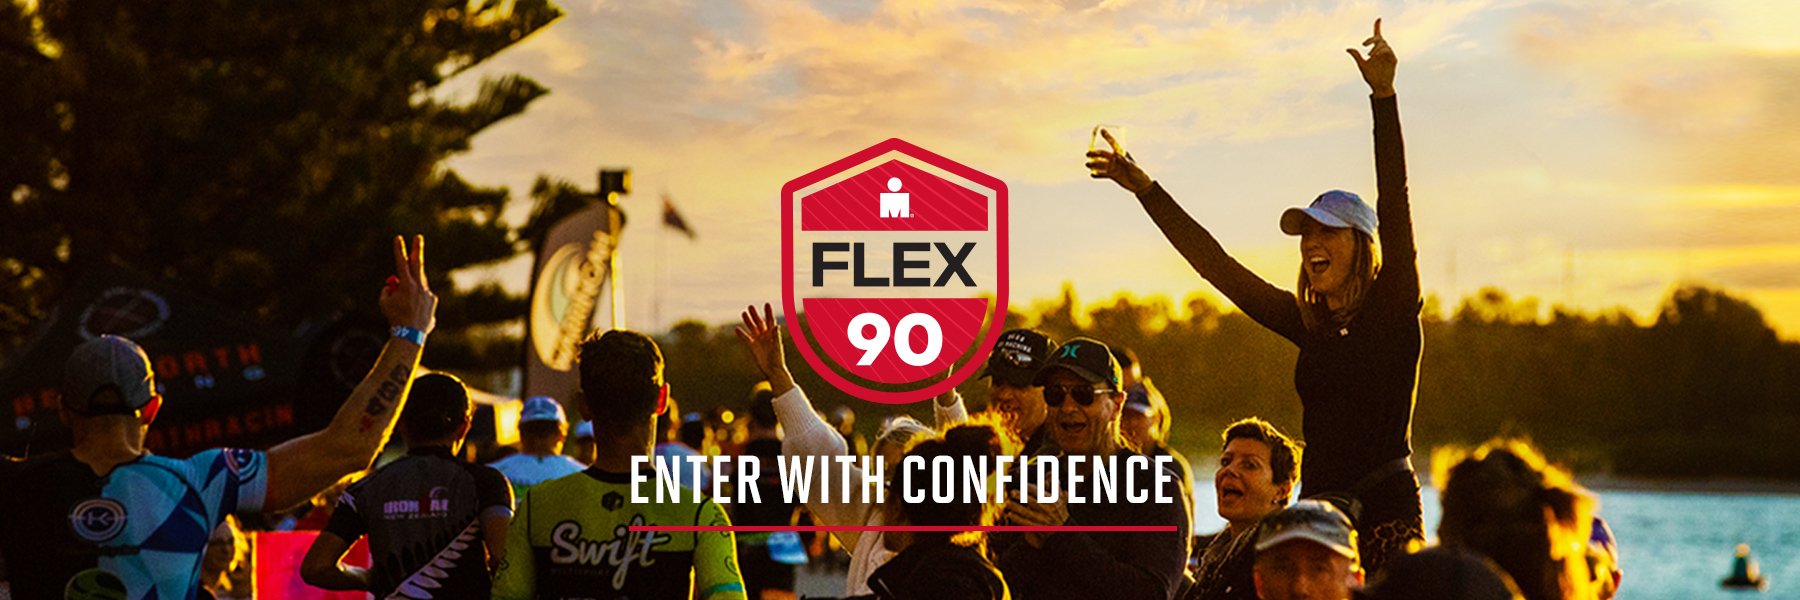 Flex90 - Enter with confidence